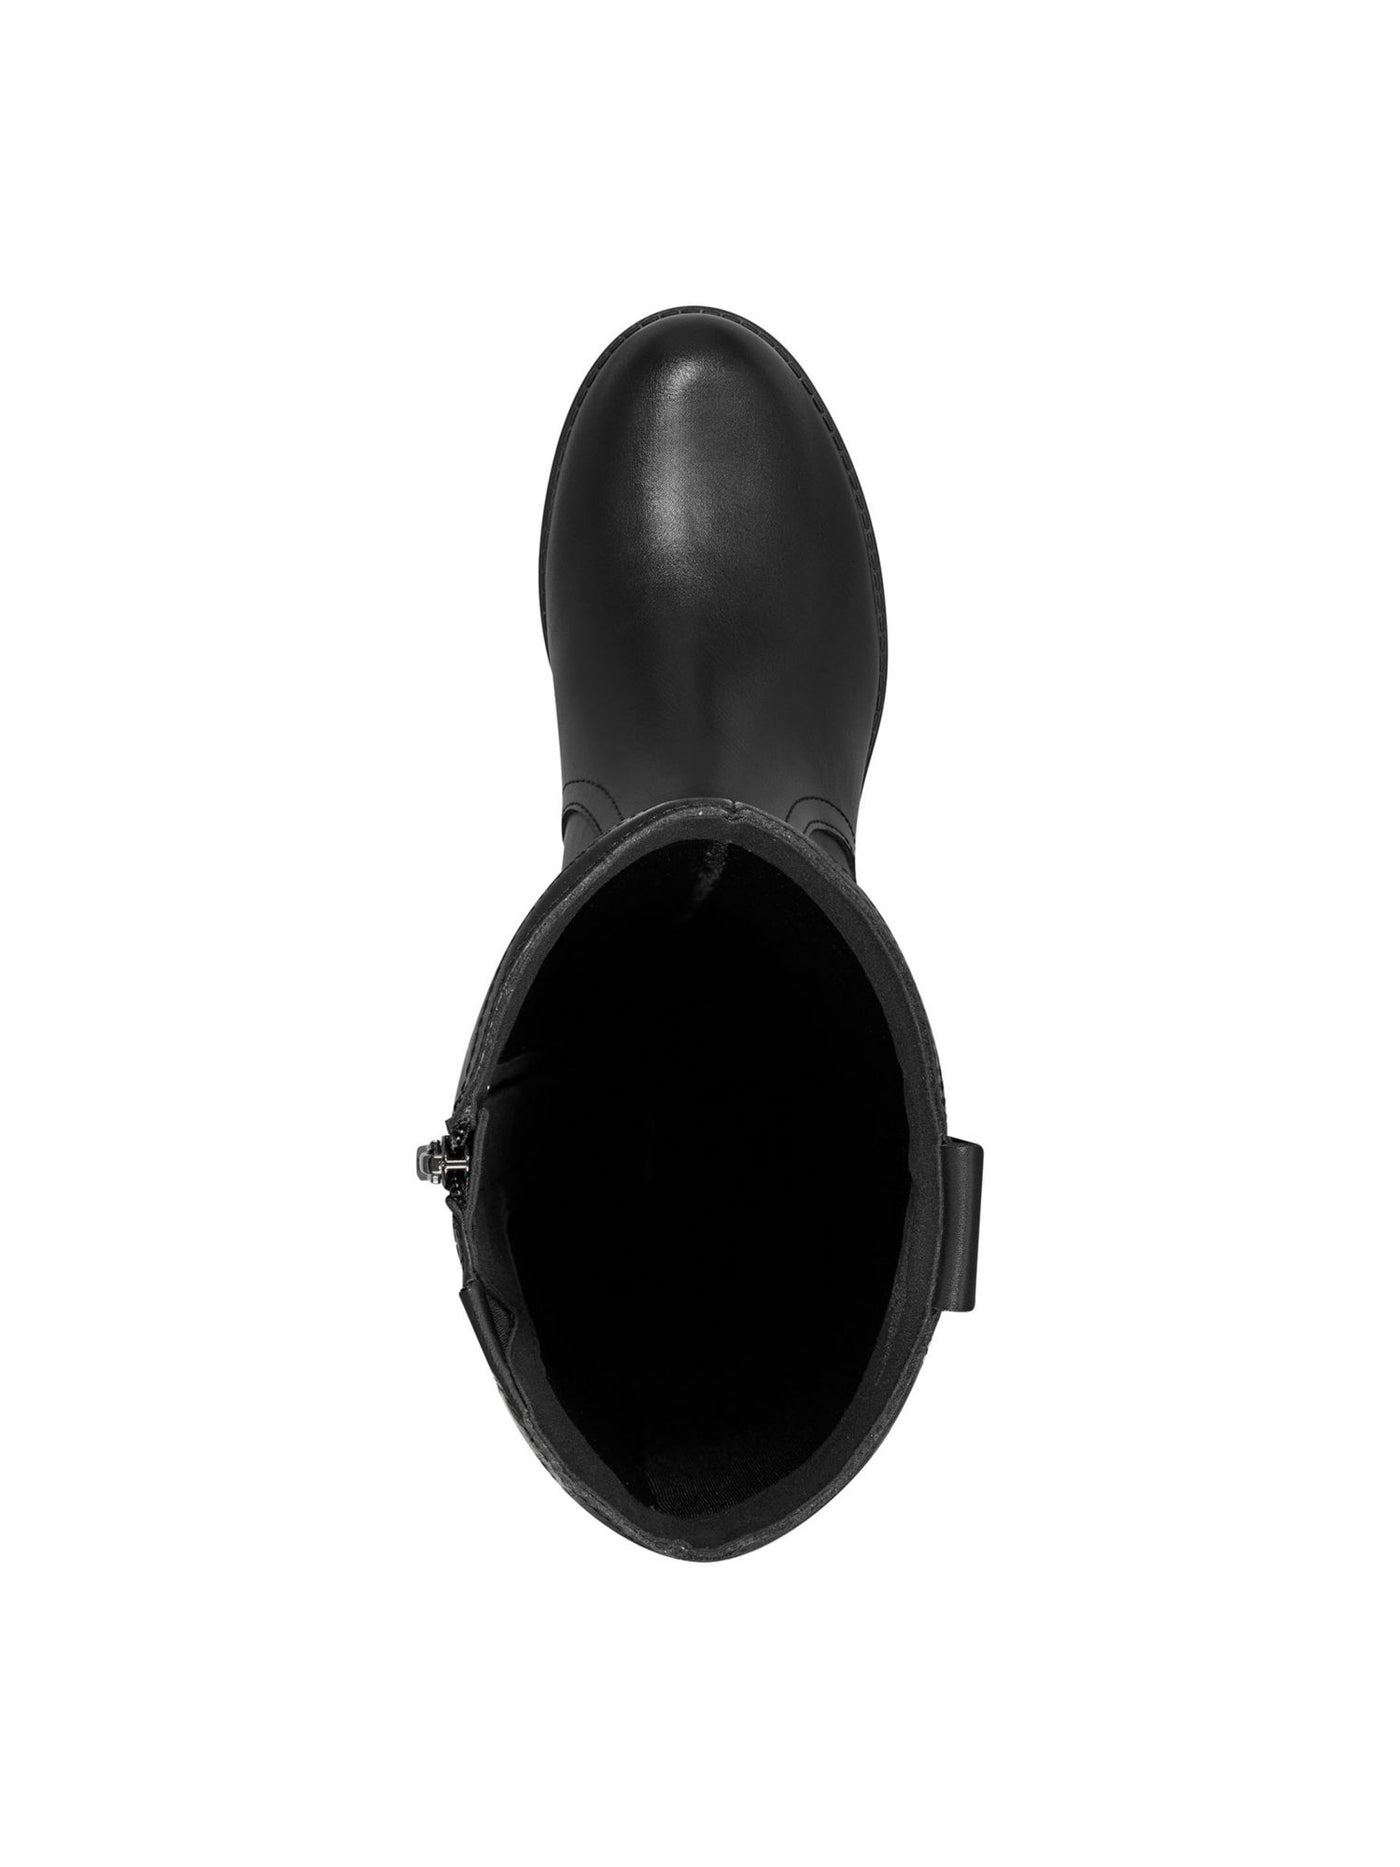 EASY SPIRIT Womens Black Zipper Accent Water Resistant Rhonda Round Toe Block Heel Riding Boot 10 W